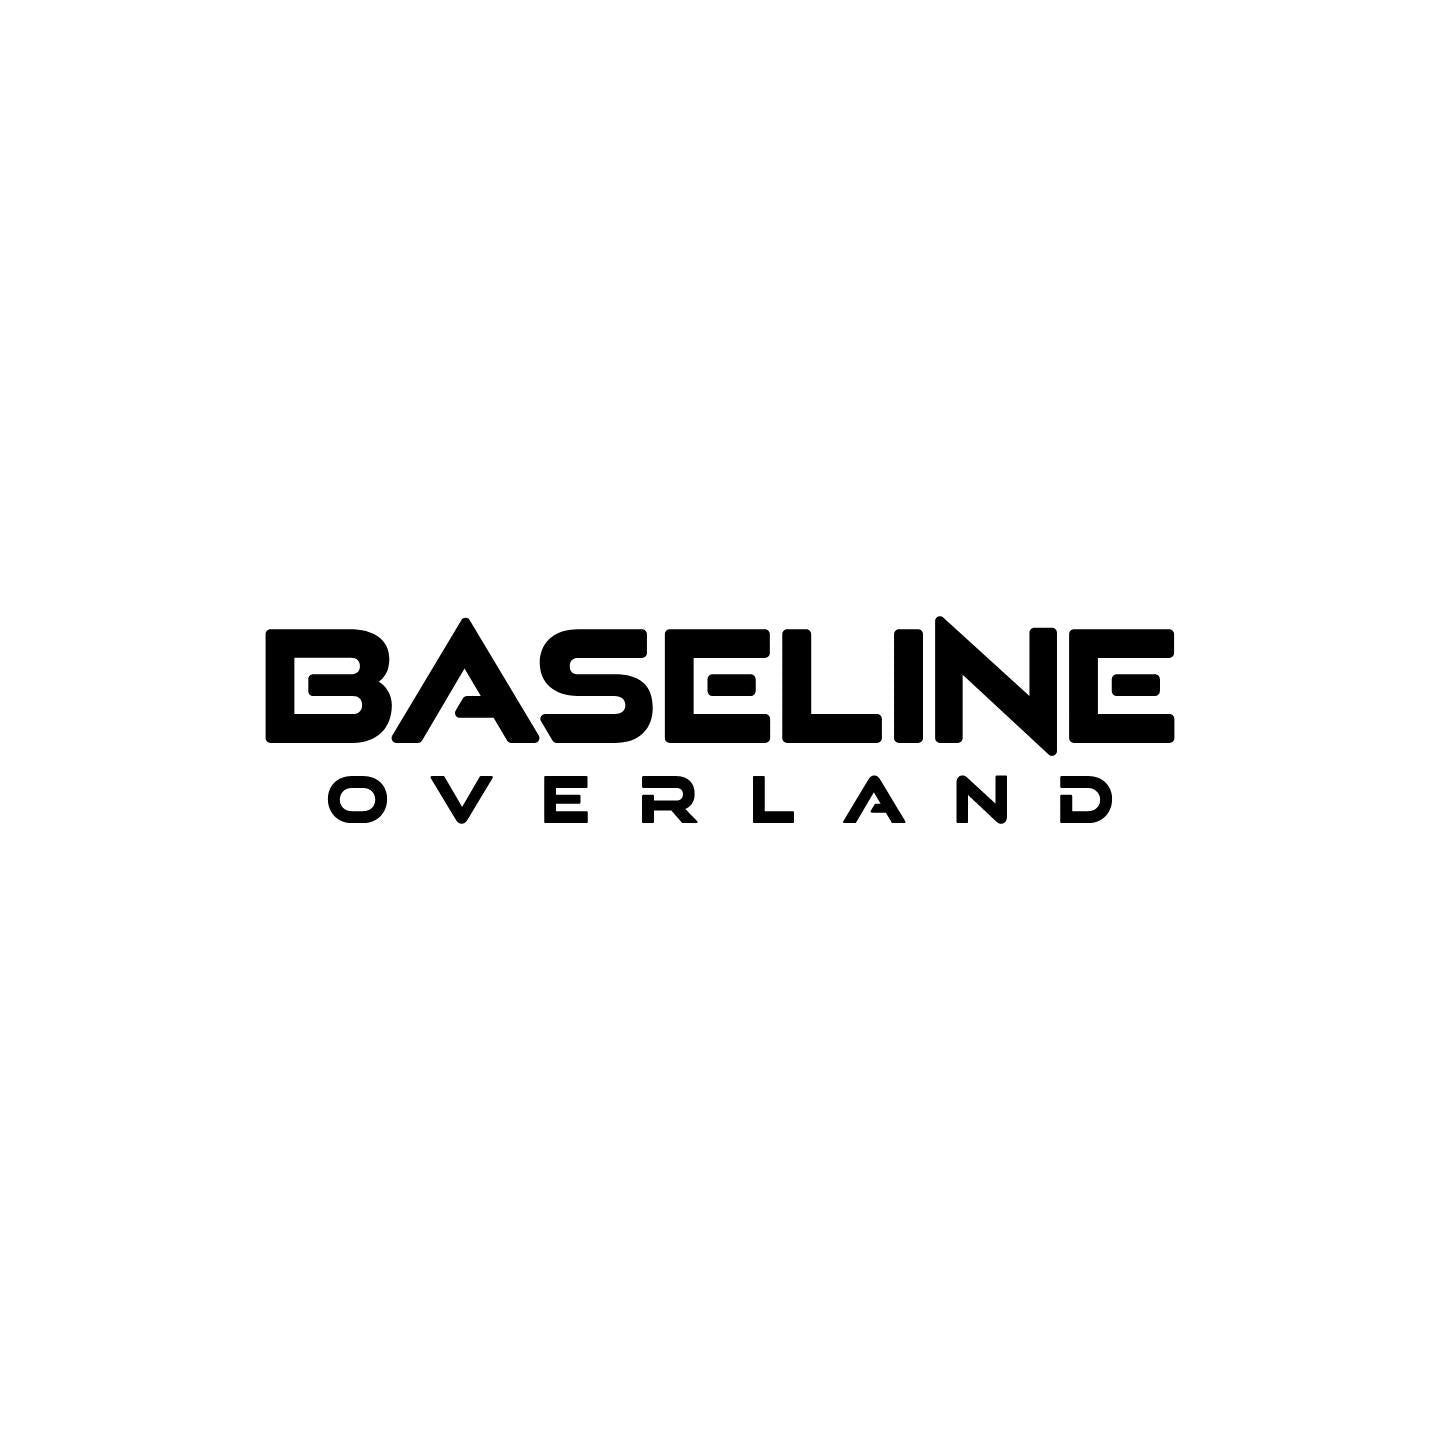 Baseline Overland Transfer Sticker